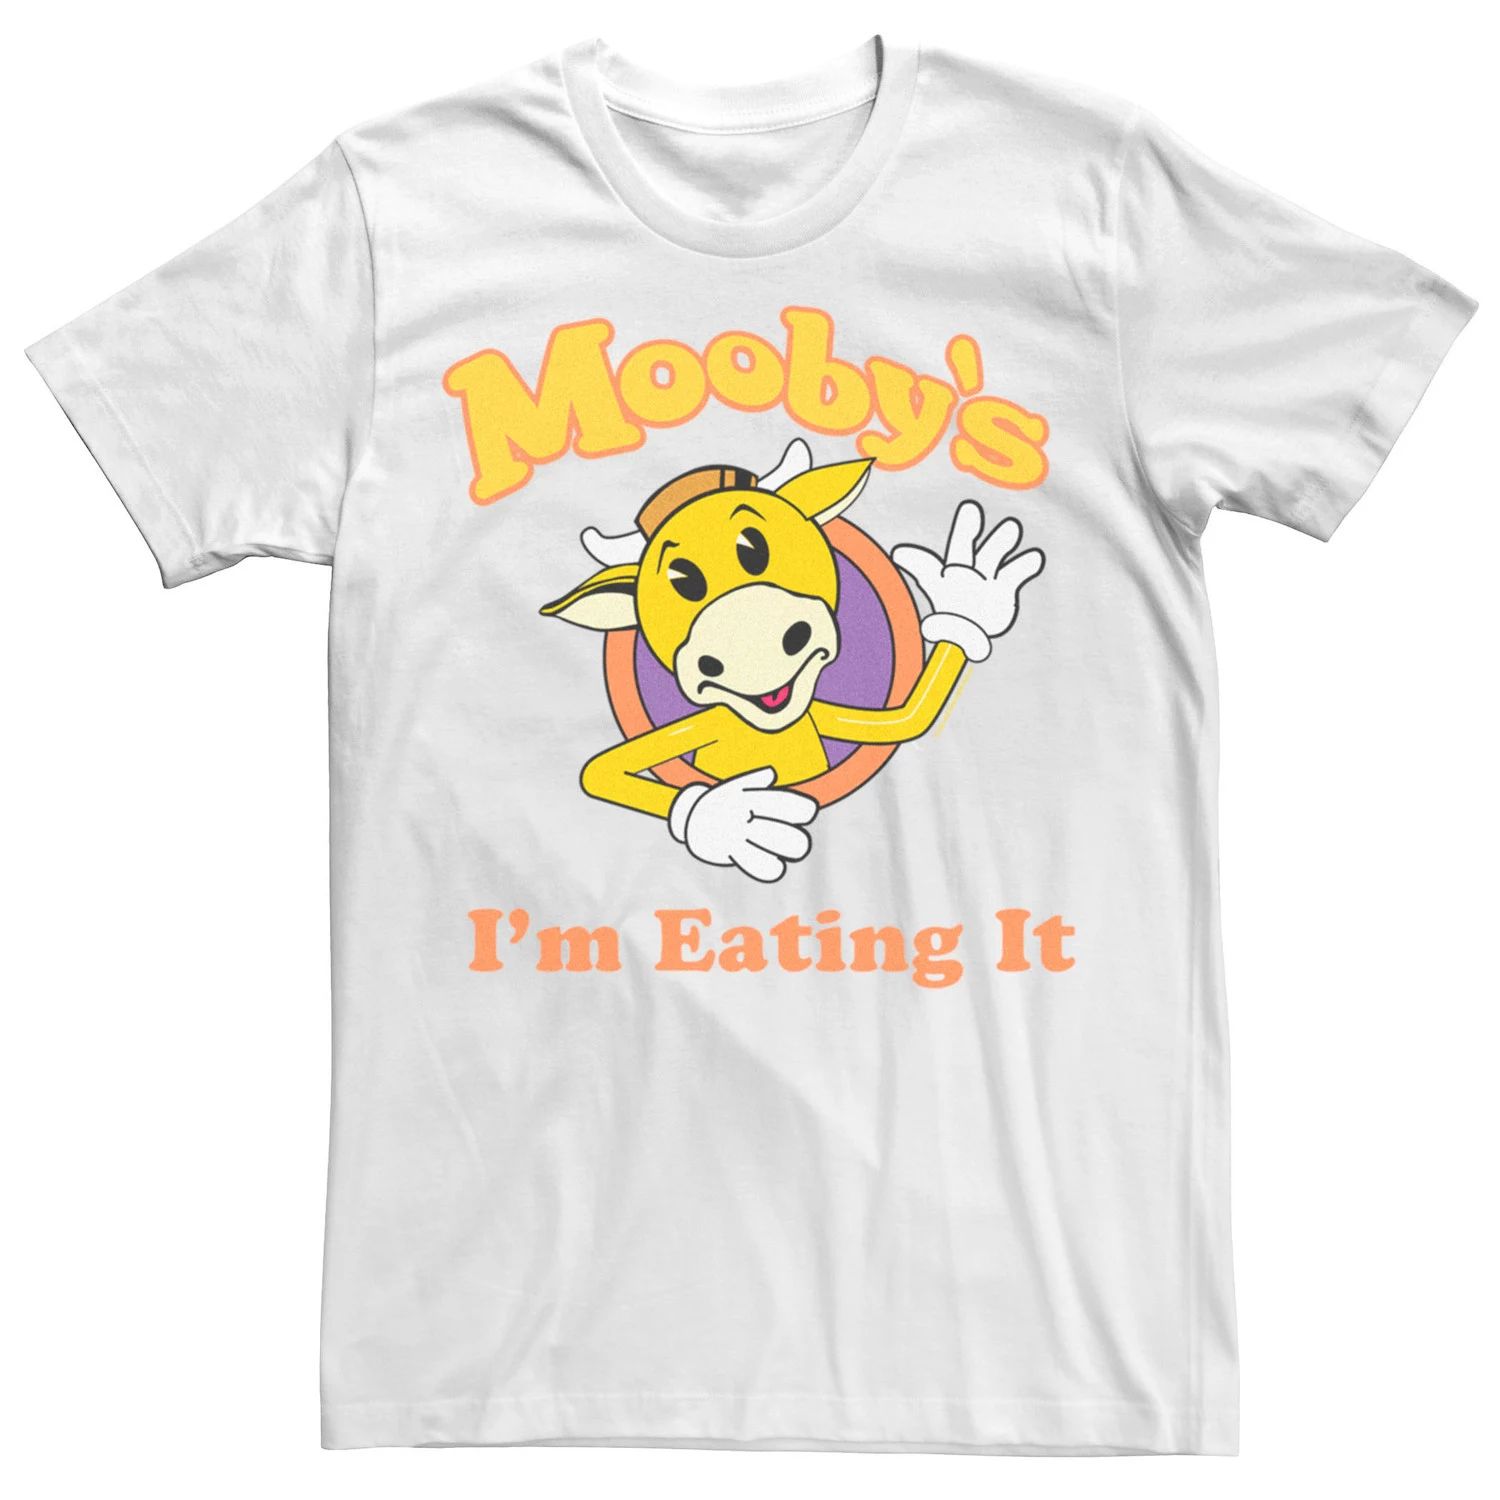 printio лонгслив джей и молчаливый боб Мужская футболка Jay And Silent Bob Mooby's I'm Eate It с развевающимся логотипом Licensed Character